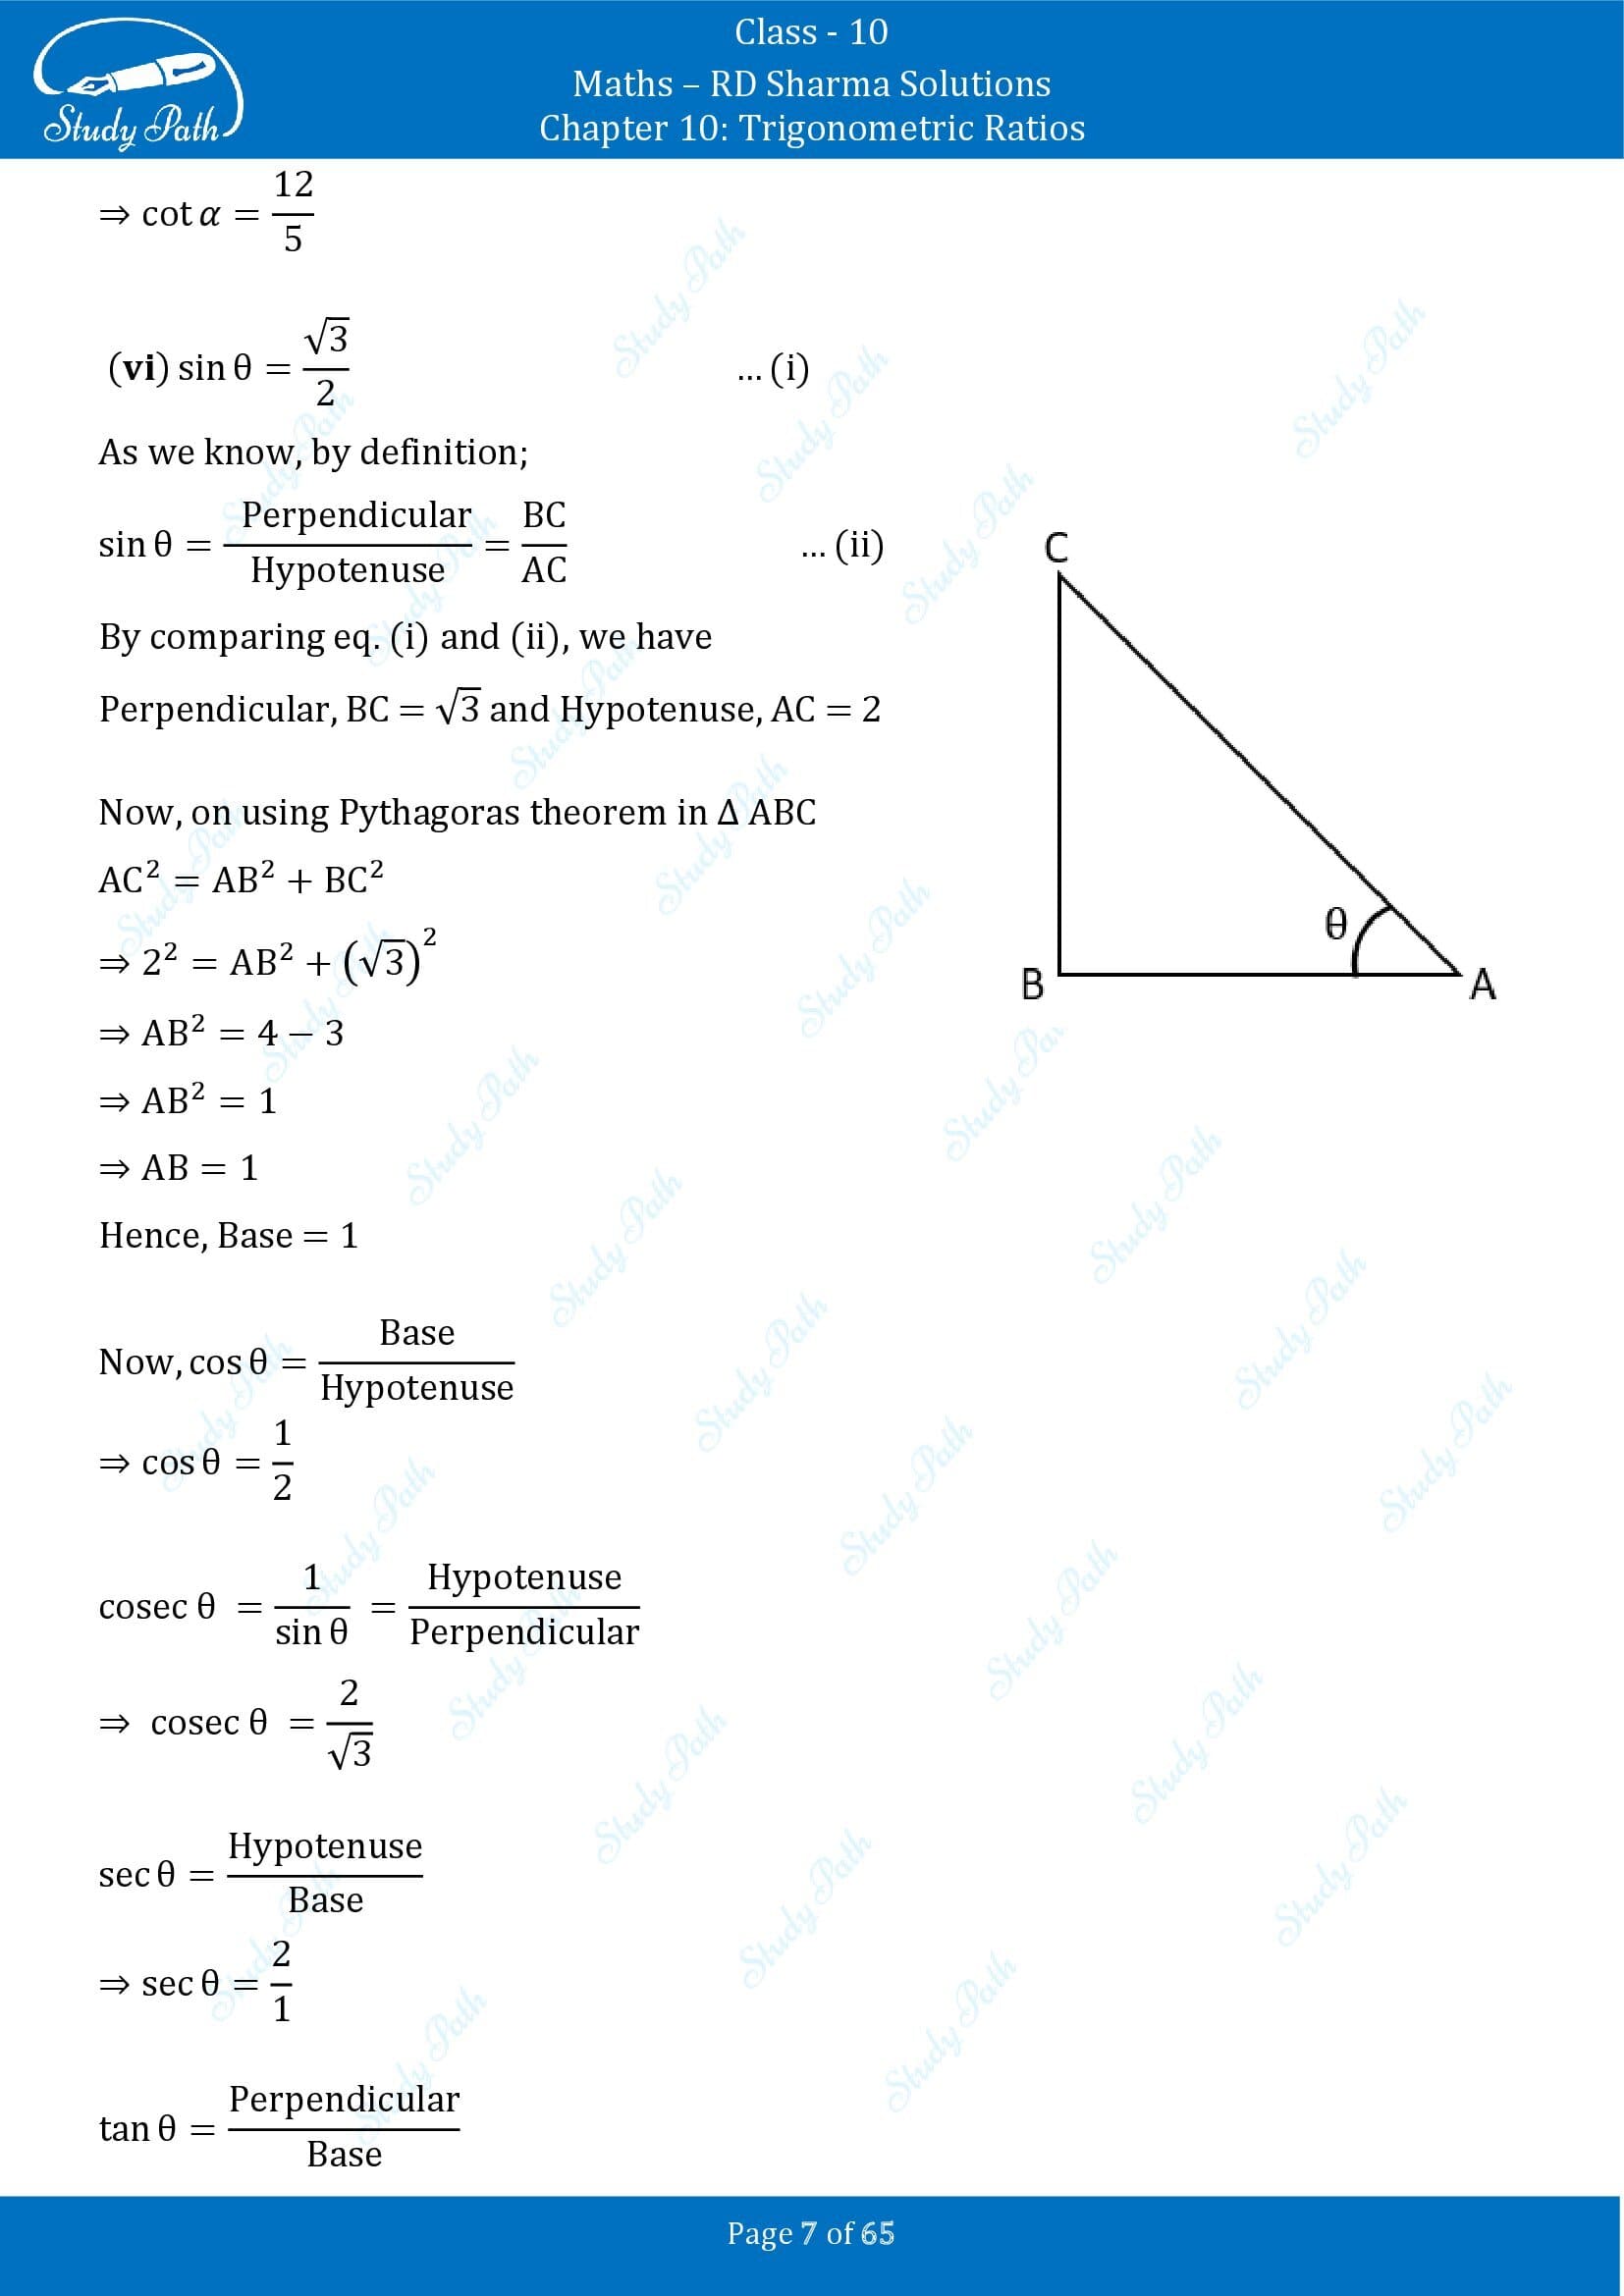 RD Sharma Solutions Class 10 Chapter 10 Trigonometric Ratios Exercise 10.1 00007